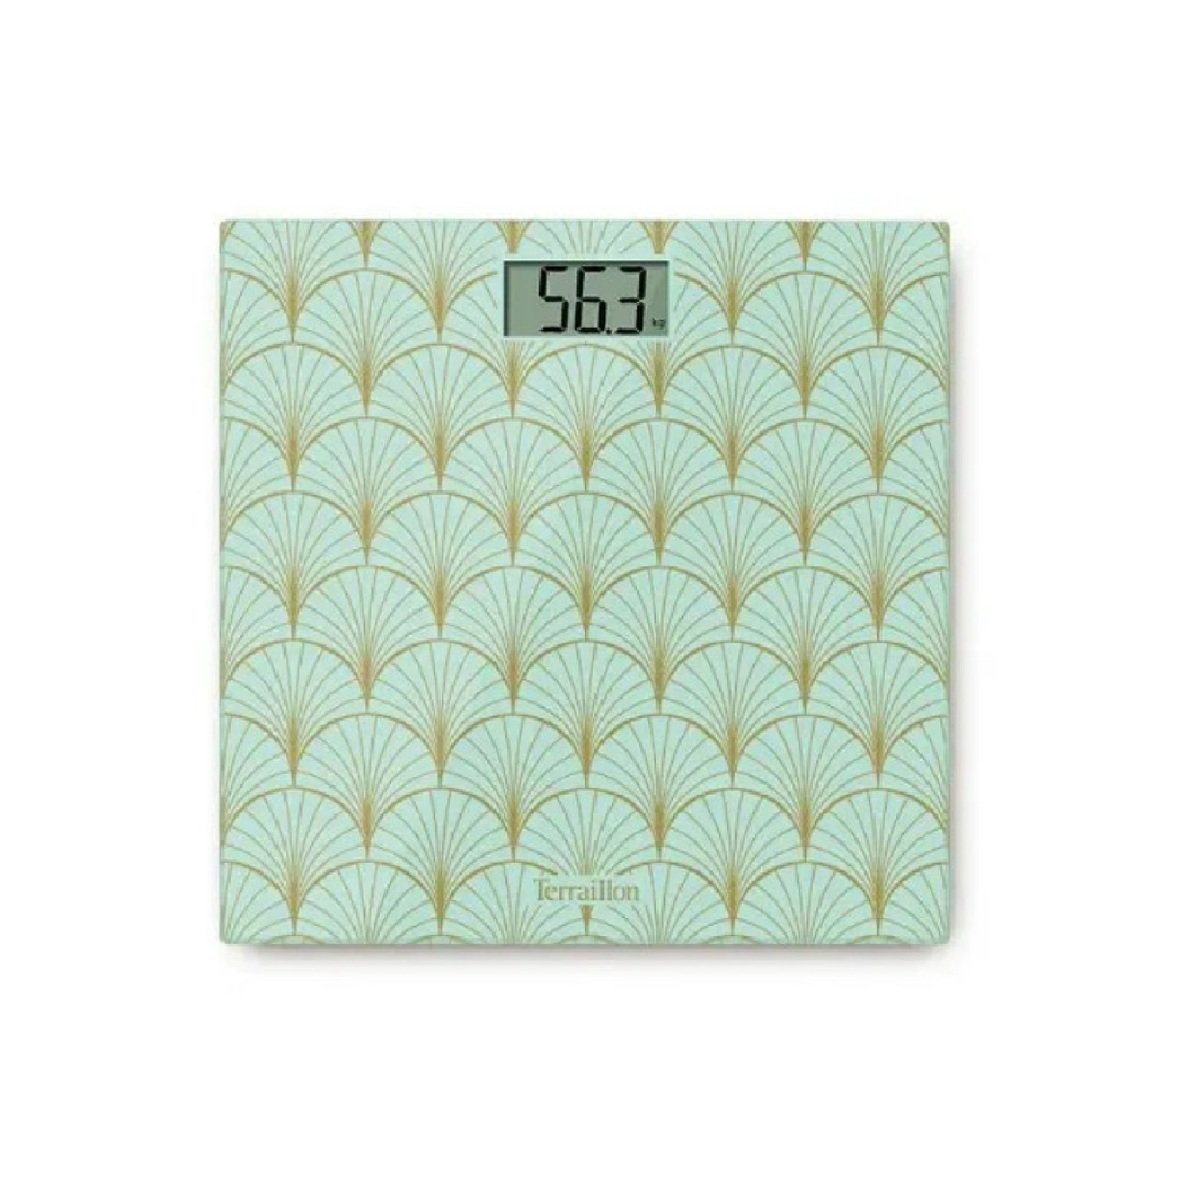 Terraillon Digital Bathroom Scale 14993 160Kg